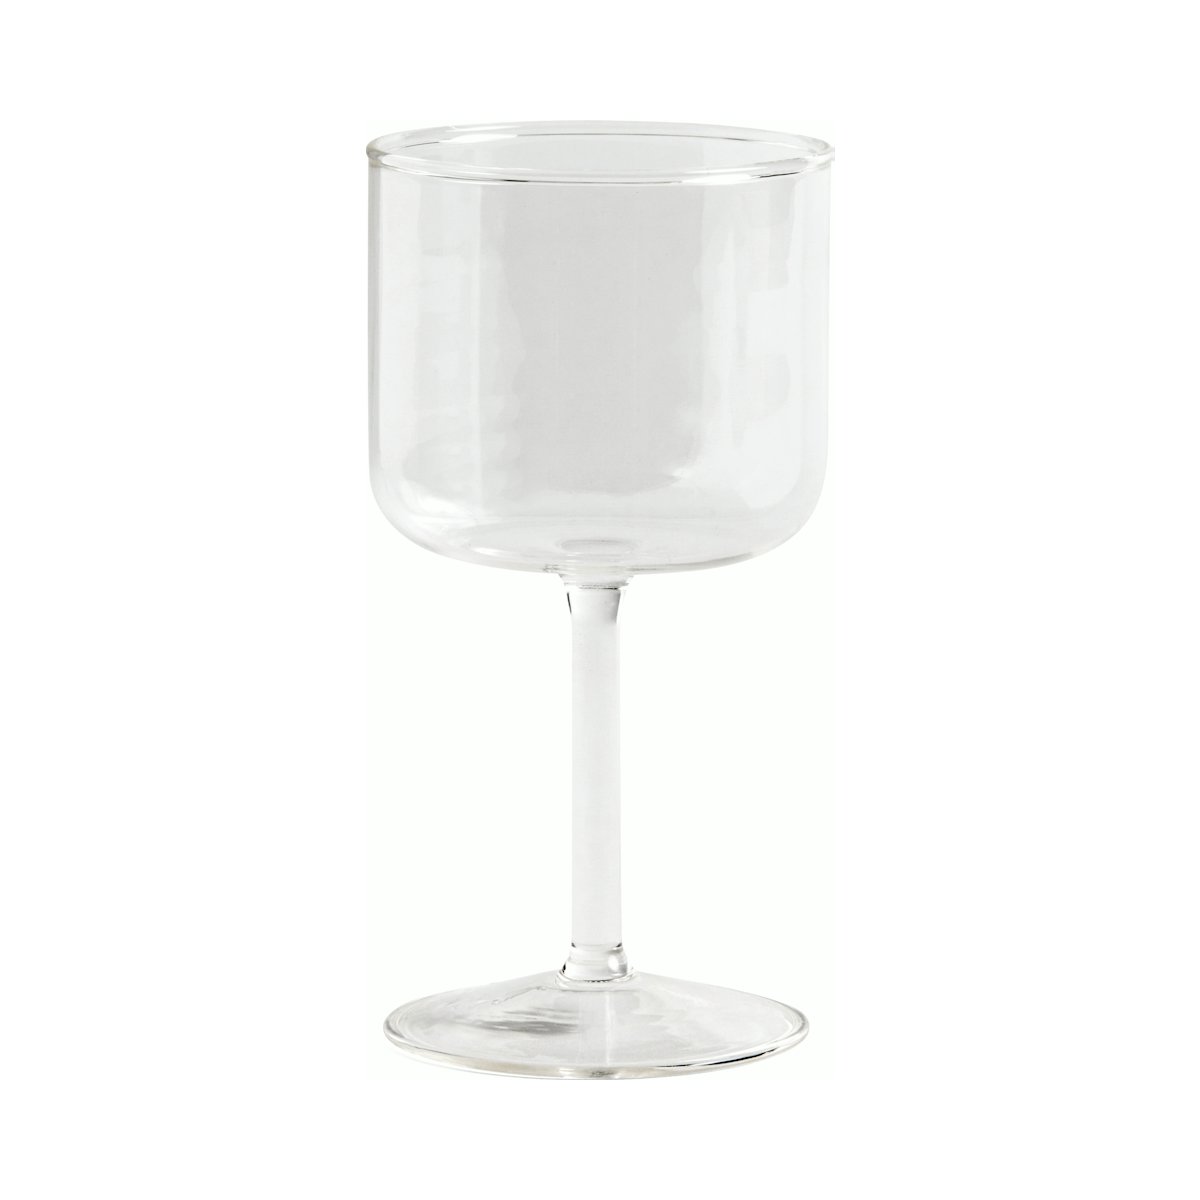 Tint Wine Glass